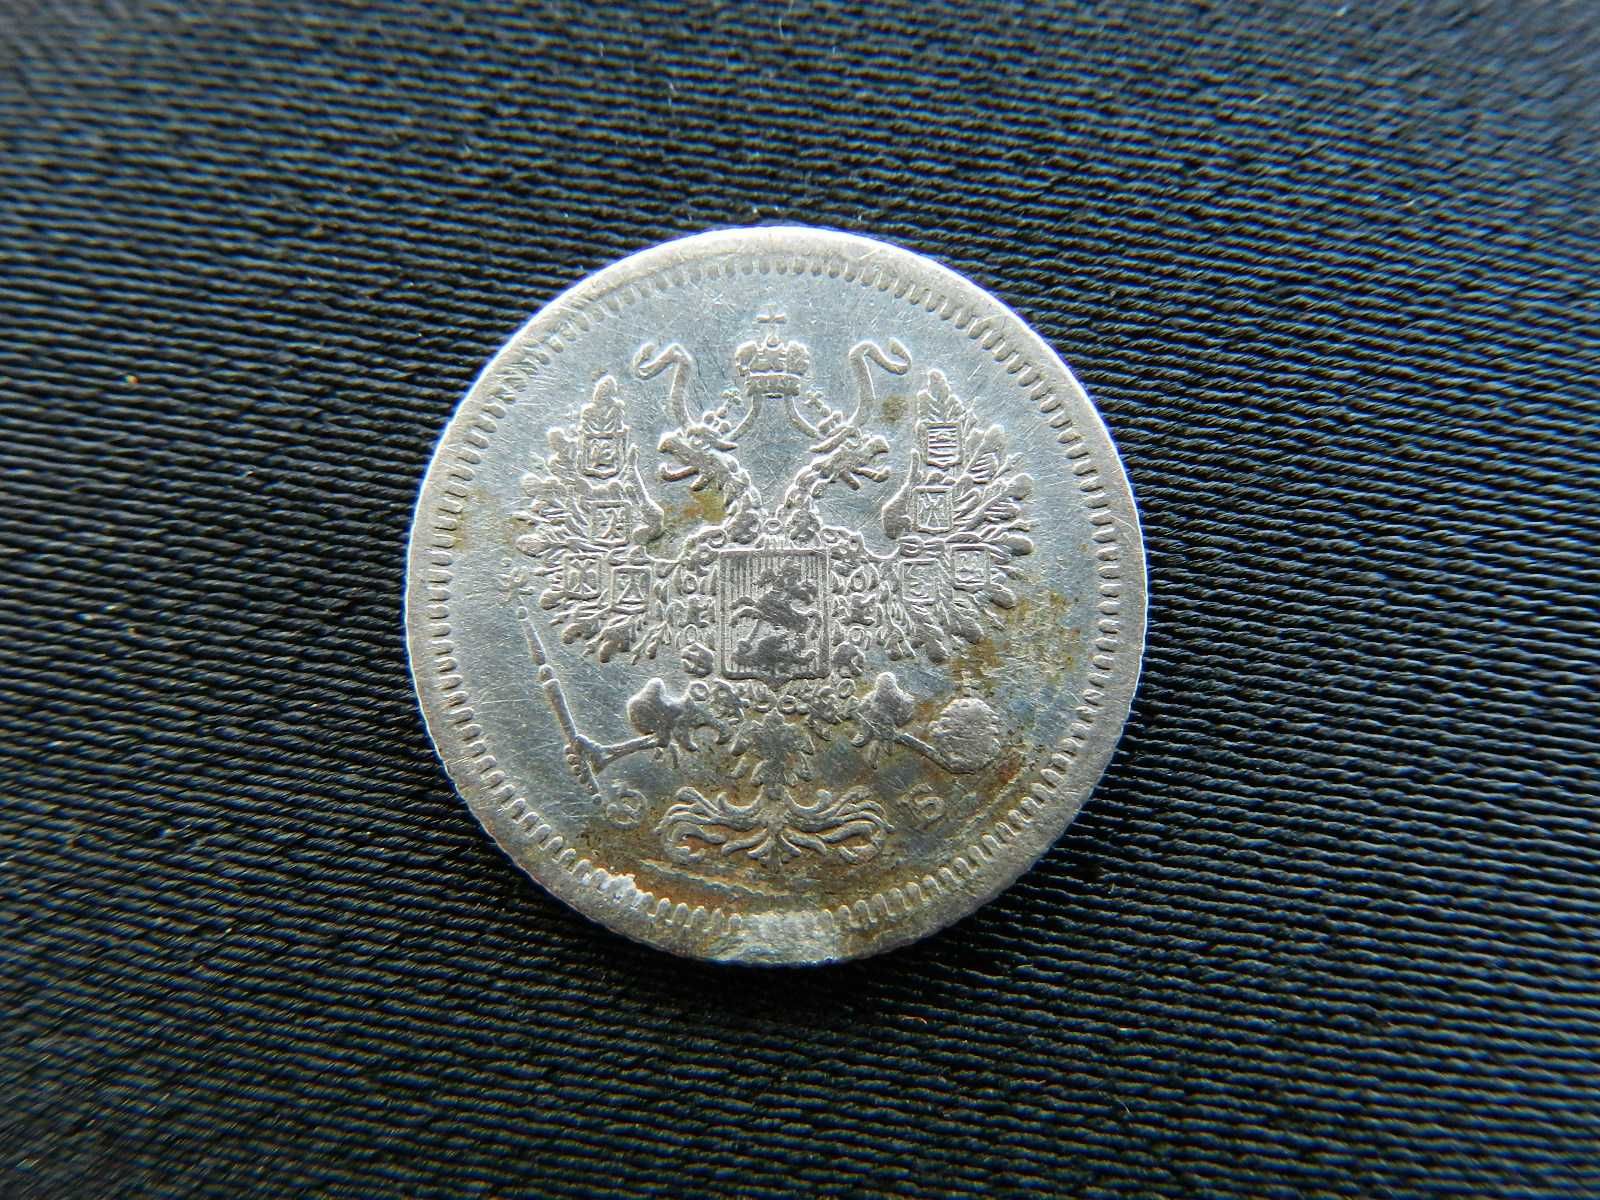 10 копеек 1907 года.Оригинал.Хорошая монета.